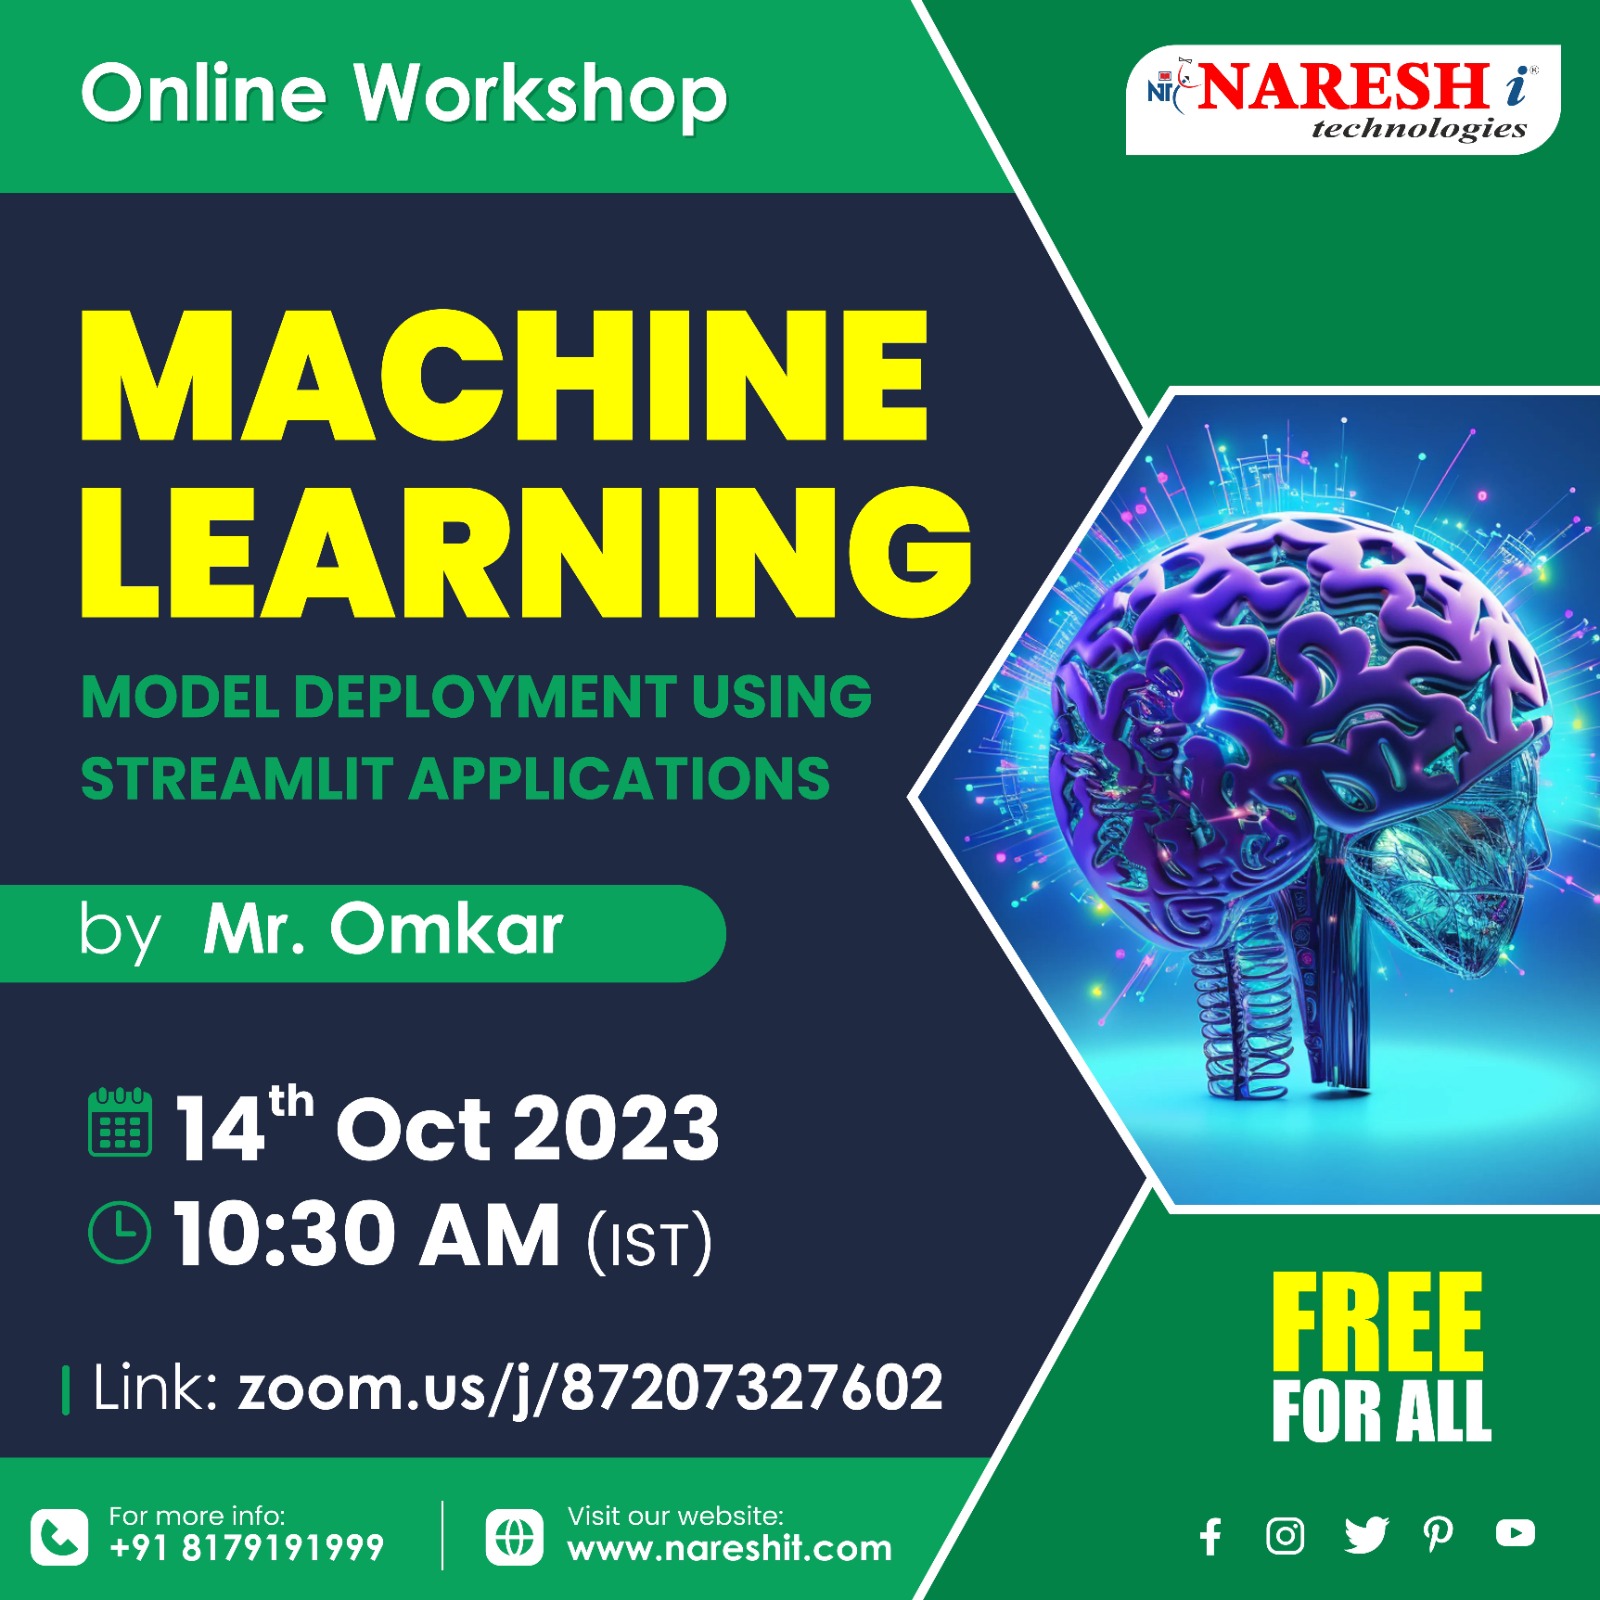 Workshop on Machine Learning Model Deployment in NareshIT, Online Event